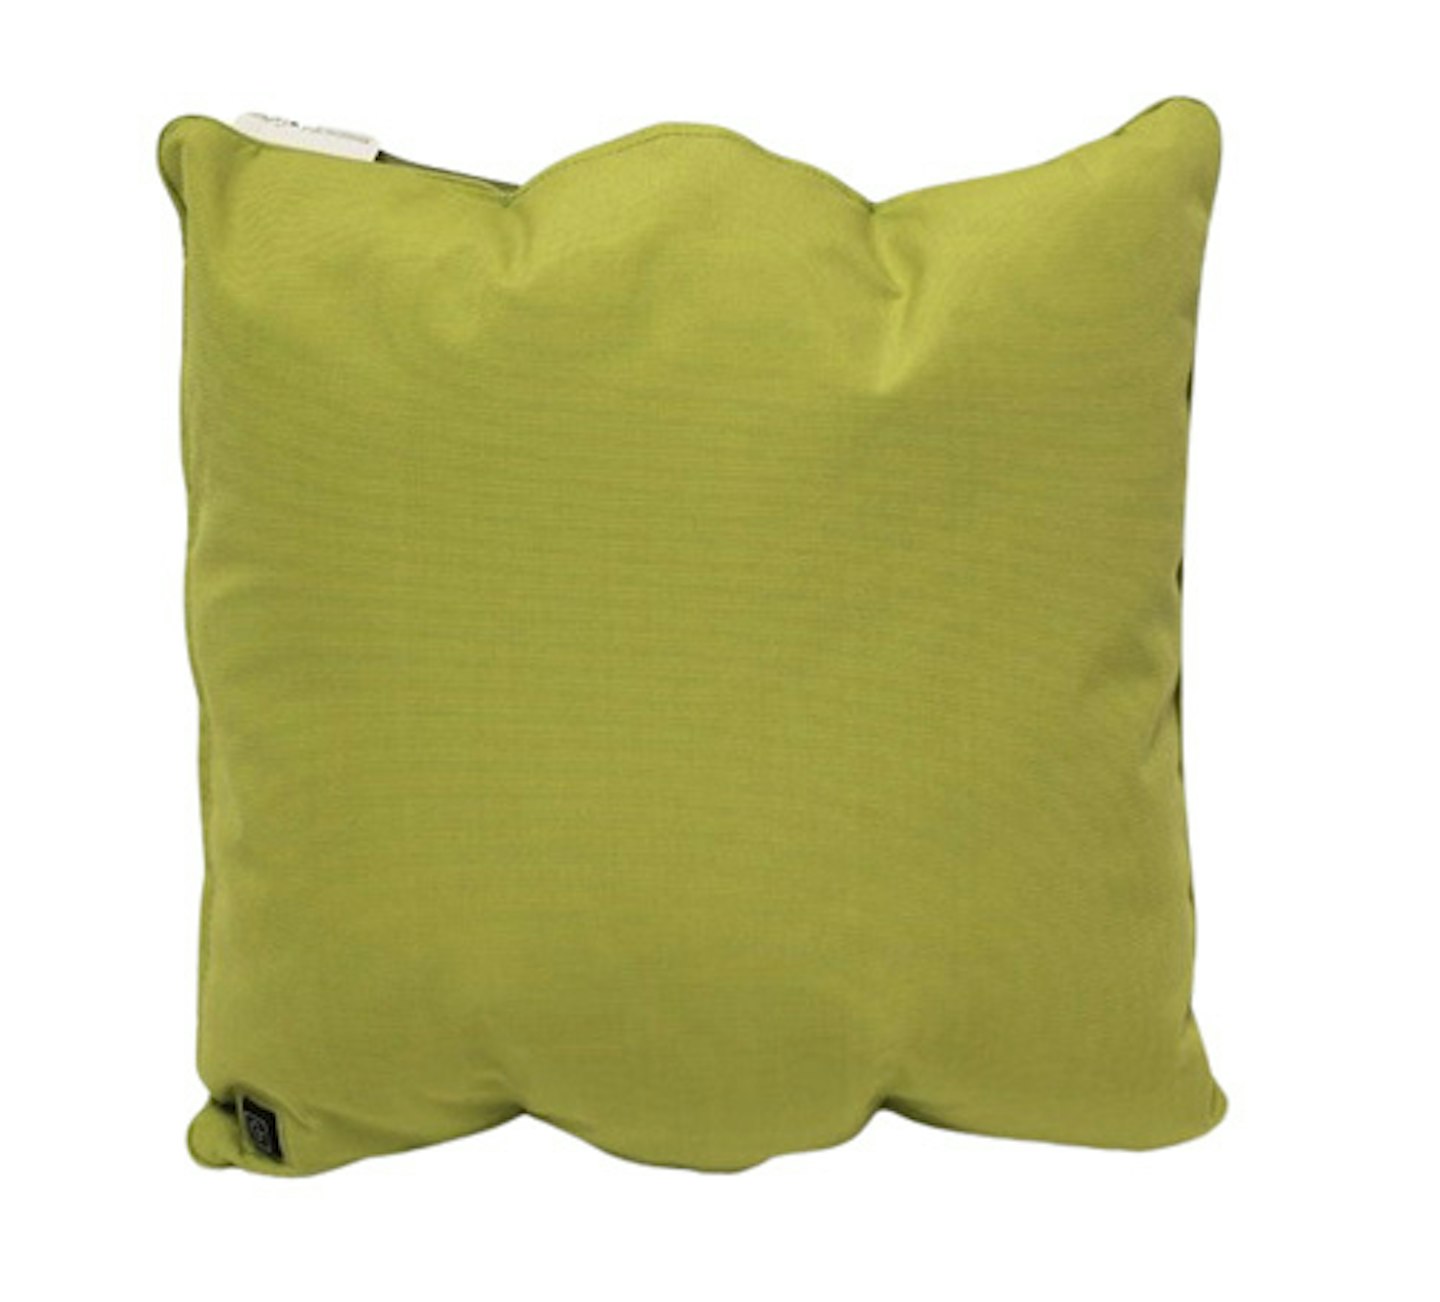 heated outdoor cushion